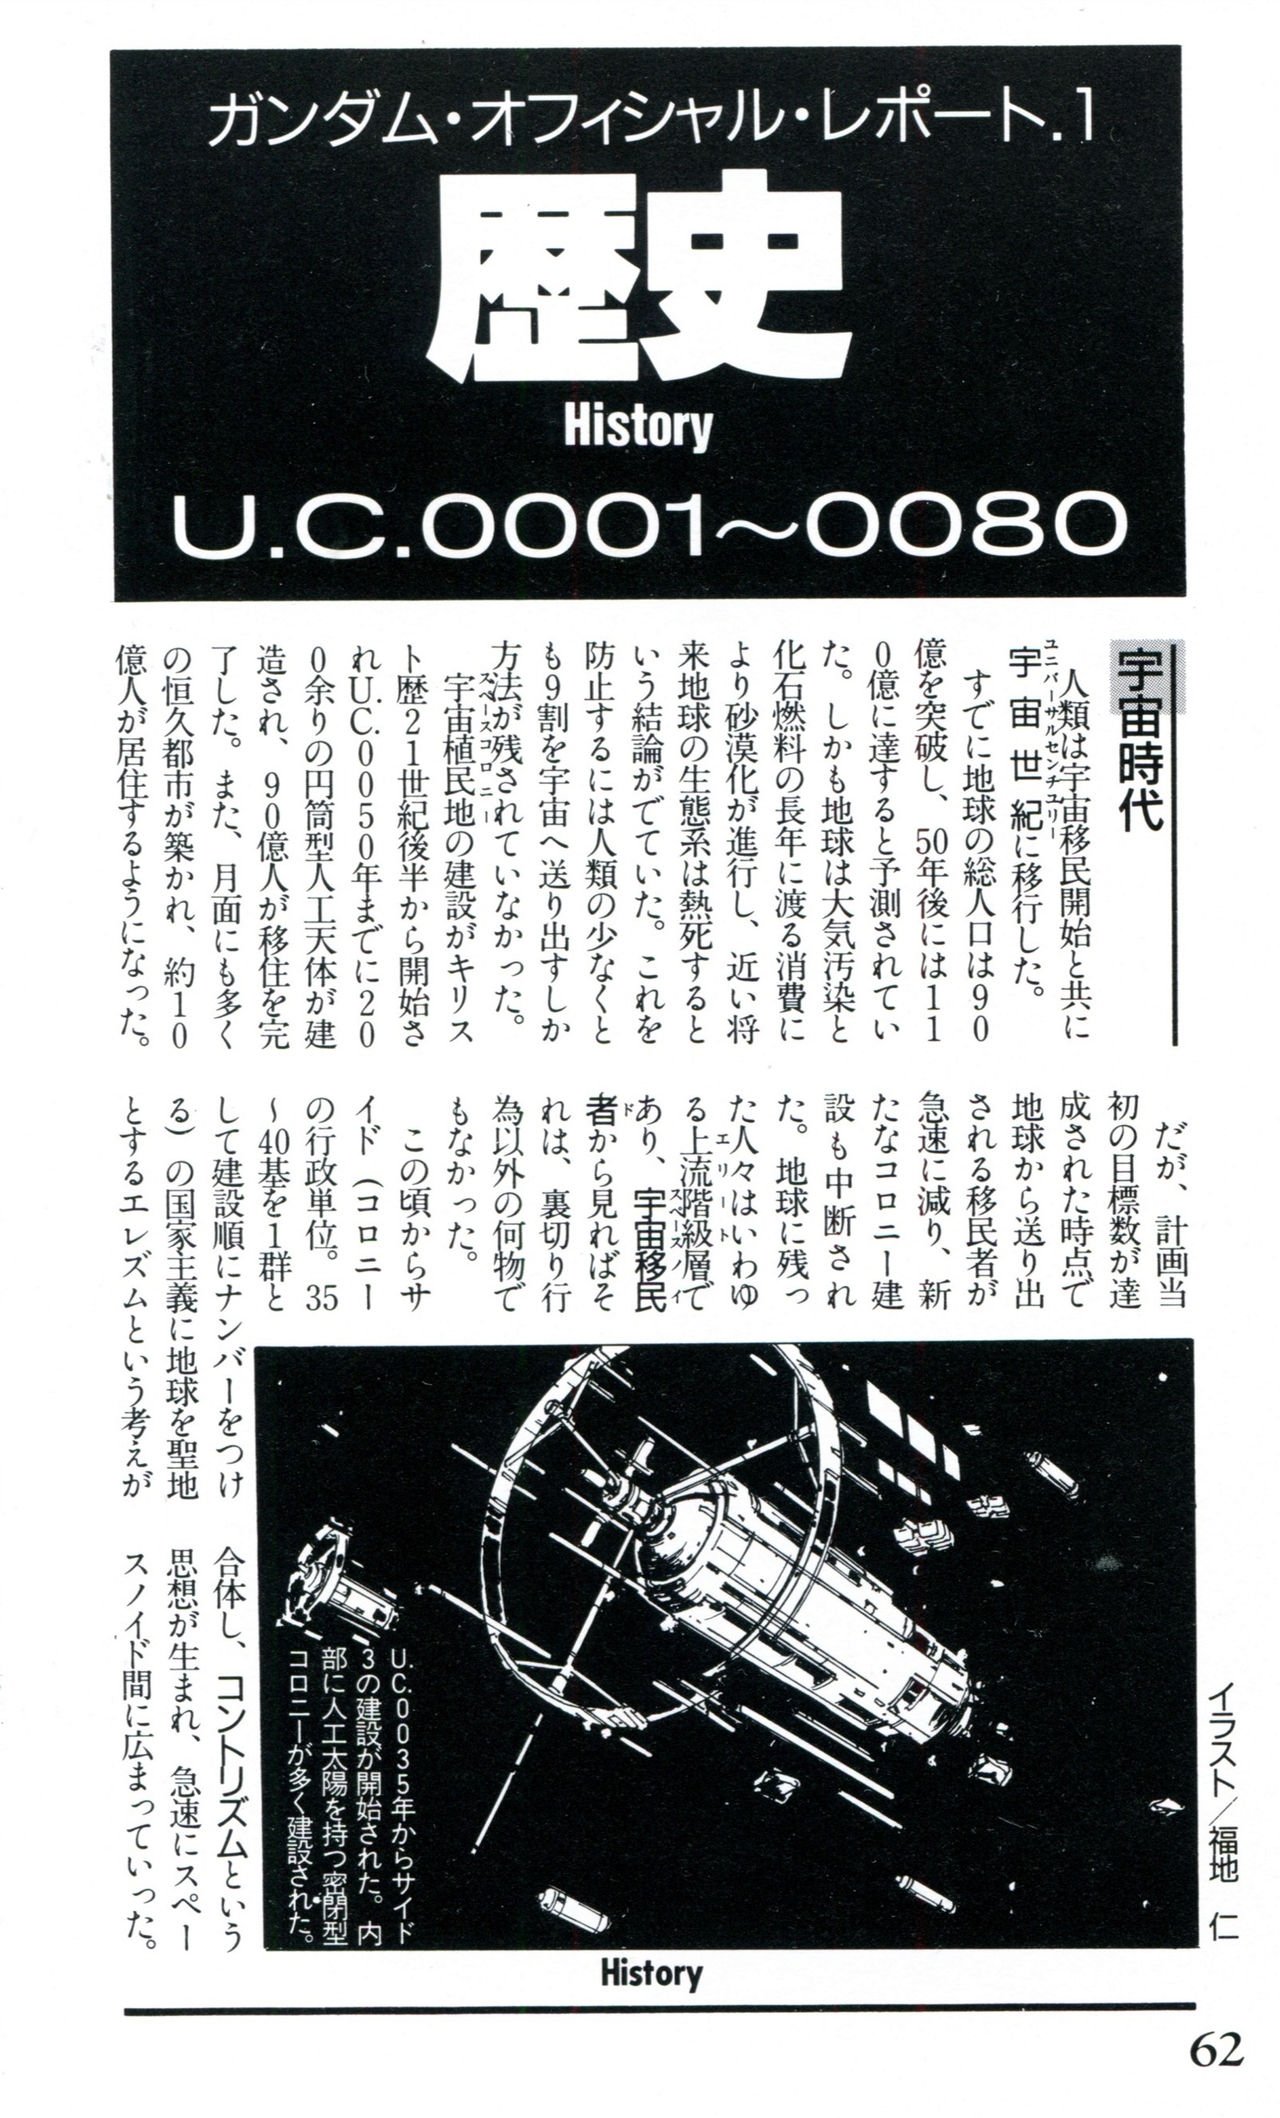 Mobile Suit Gundam U.C. Box MS Gundam Encyclopedia NO.01 - Mobile Suit Gundam 61